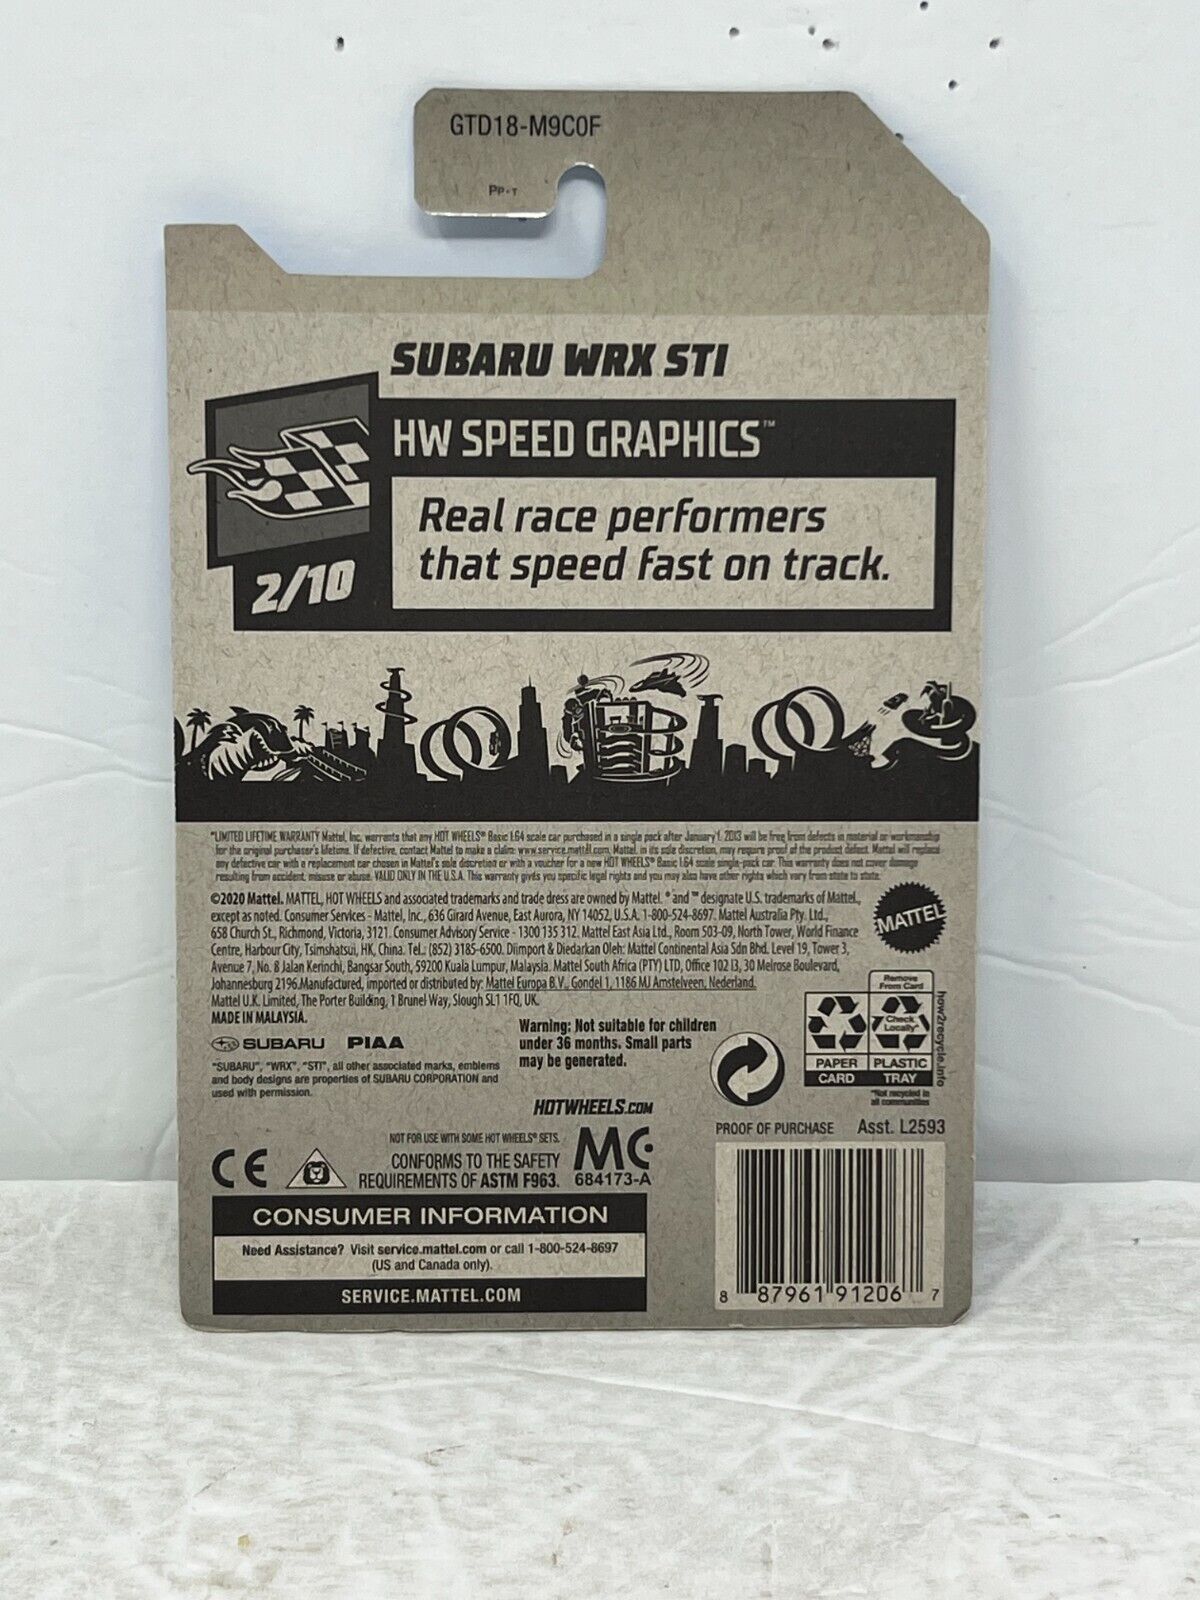 Hot Wheels Zamac 2017 HW Speed Graphics Subaru WRX STI 1:64 Diecast